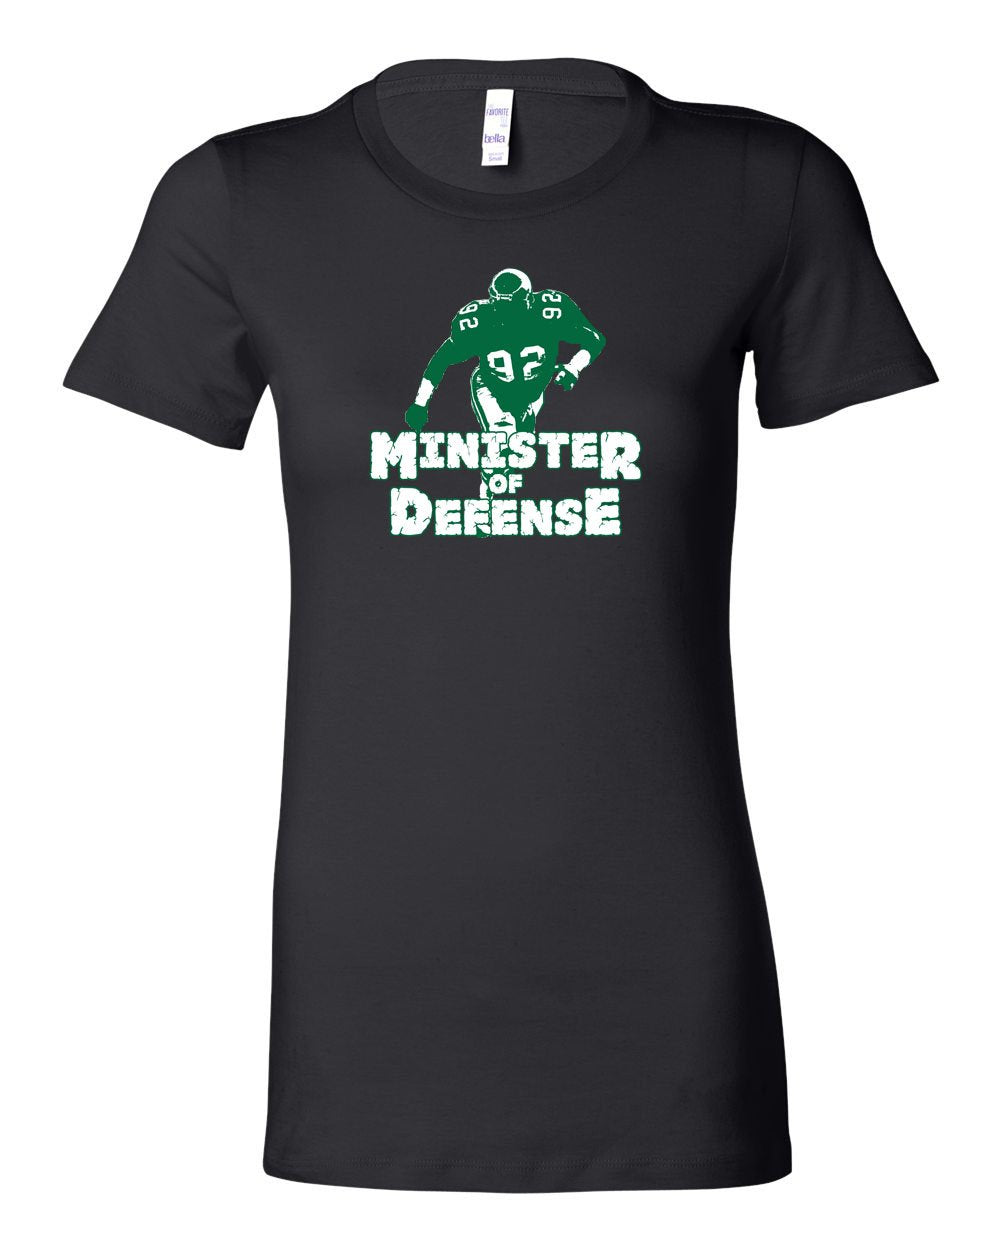 Minister Of Defense LADIES Junior-Fit T-Shirt